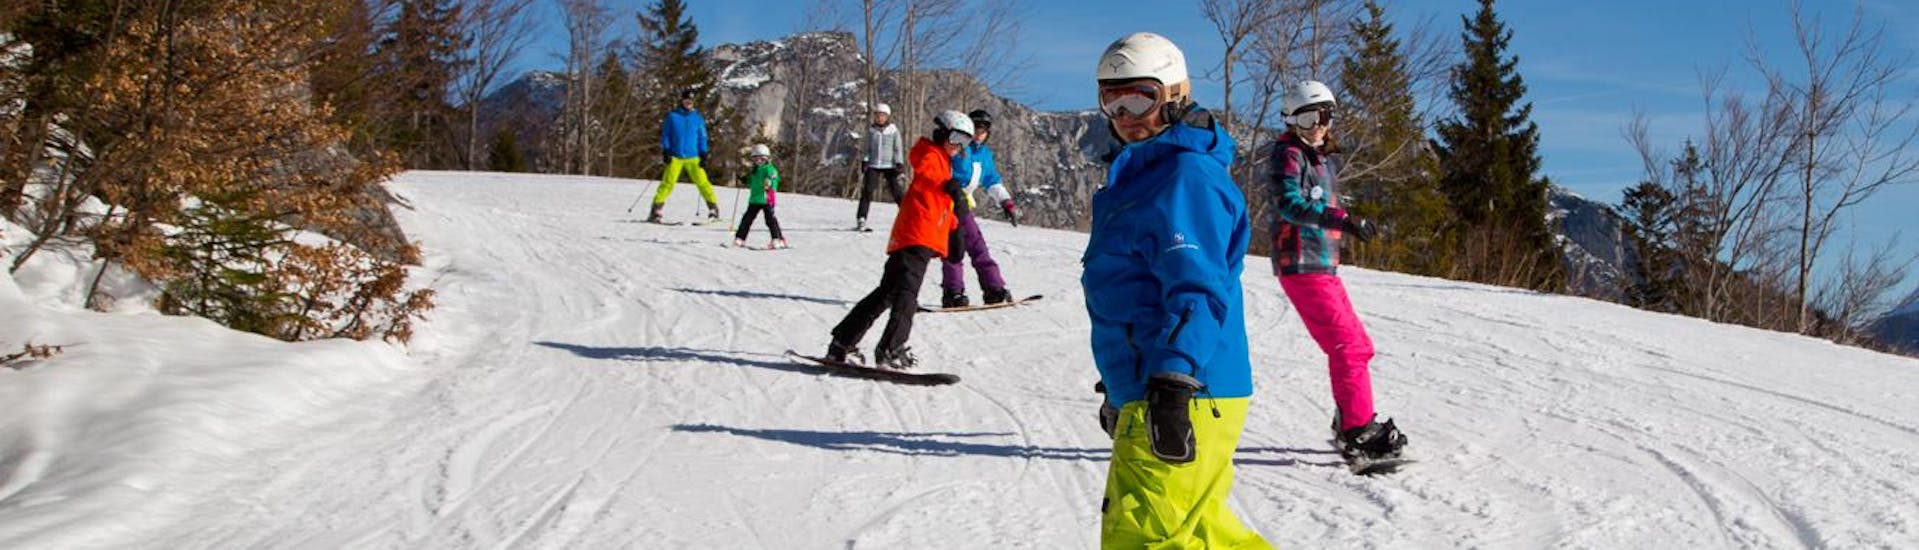 Lezioni di Snowboard a partire da 6 anni per avanzati.